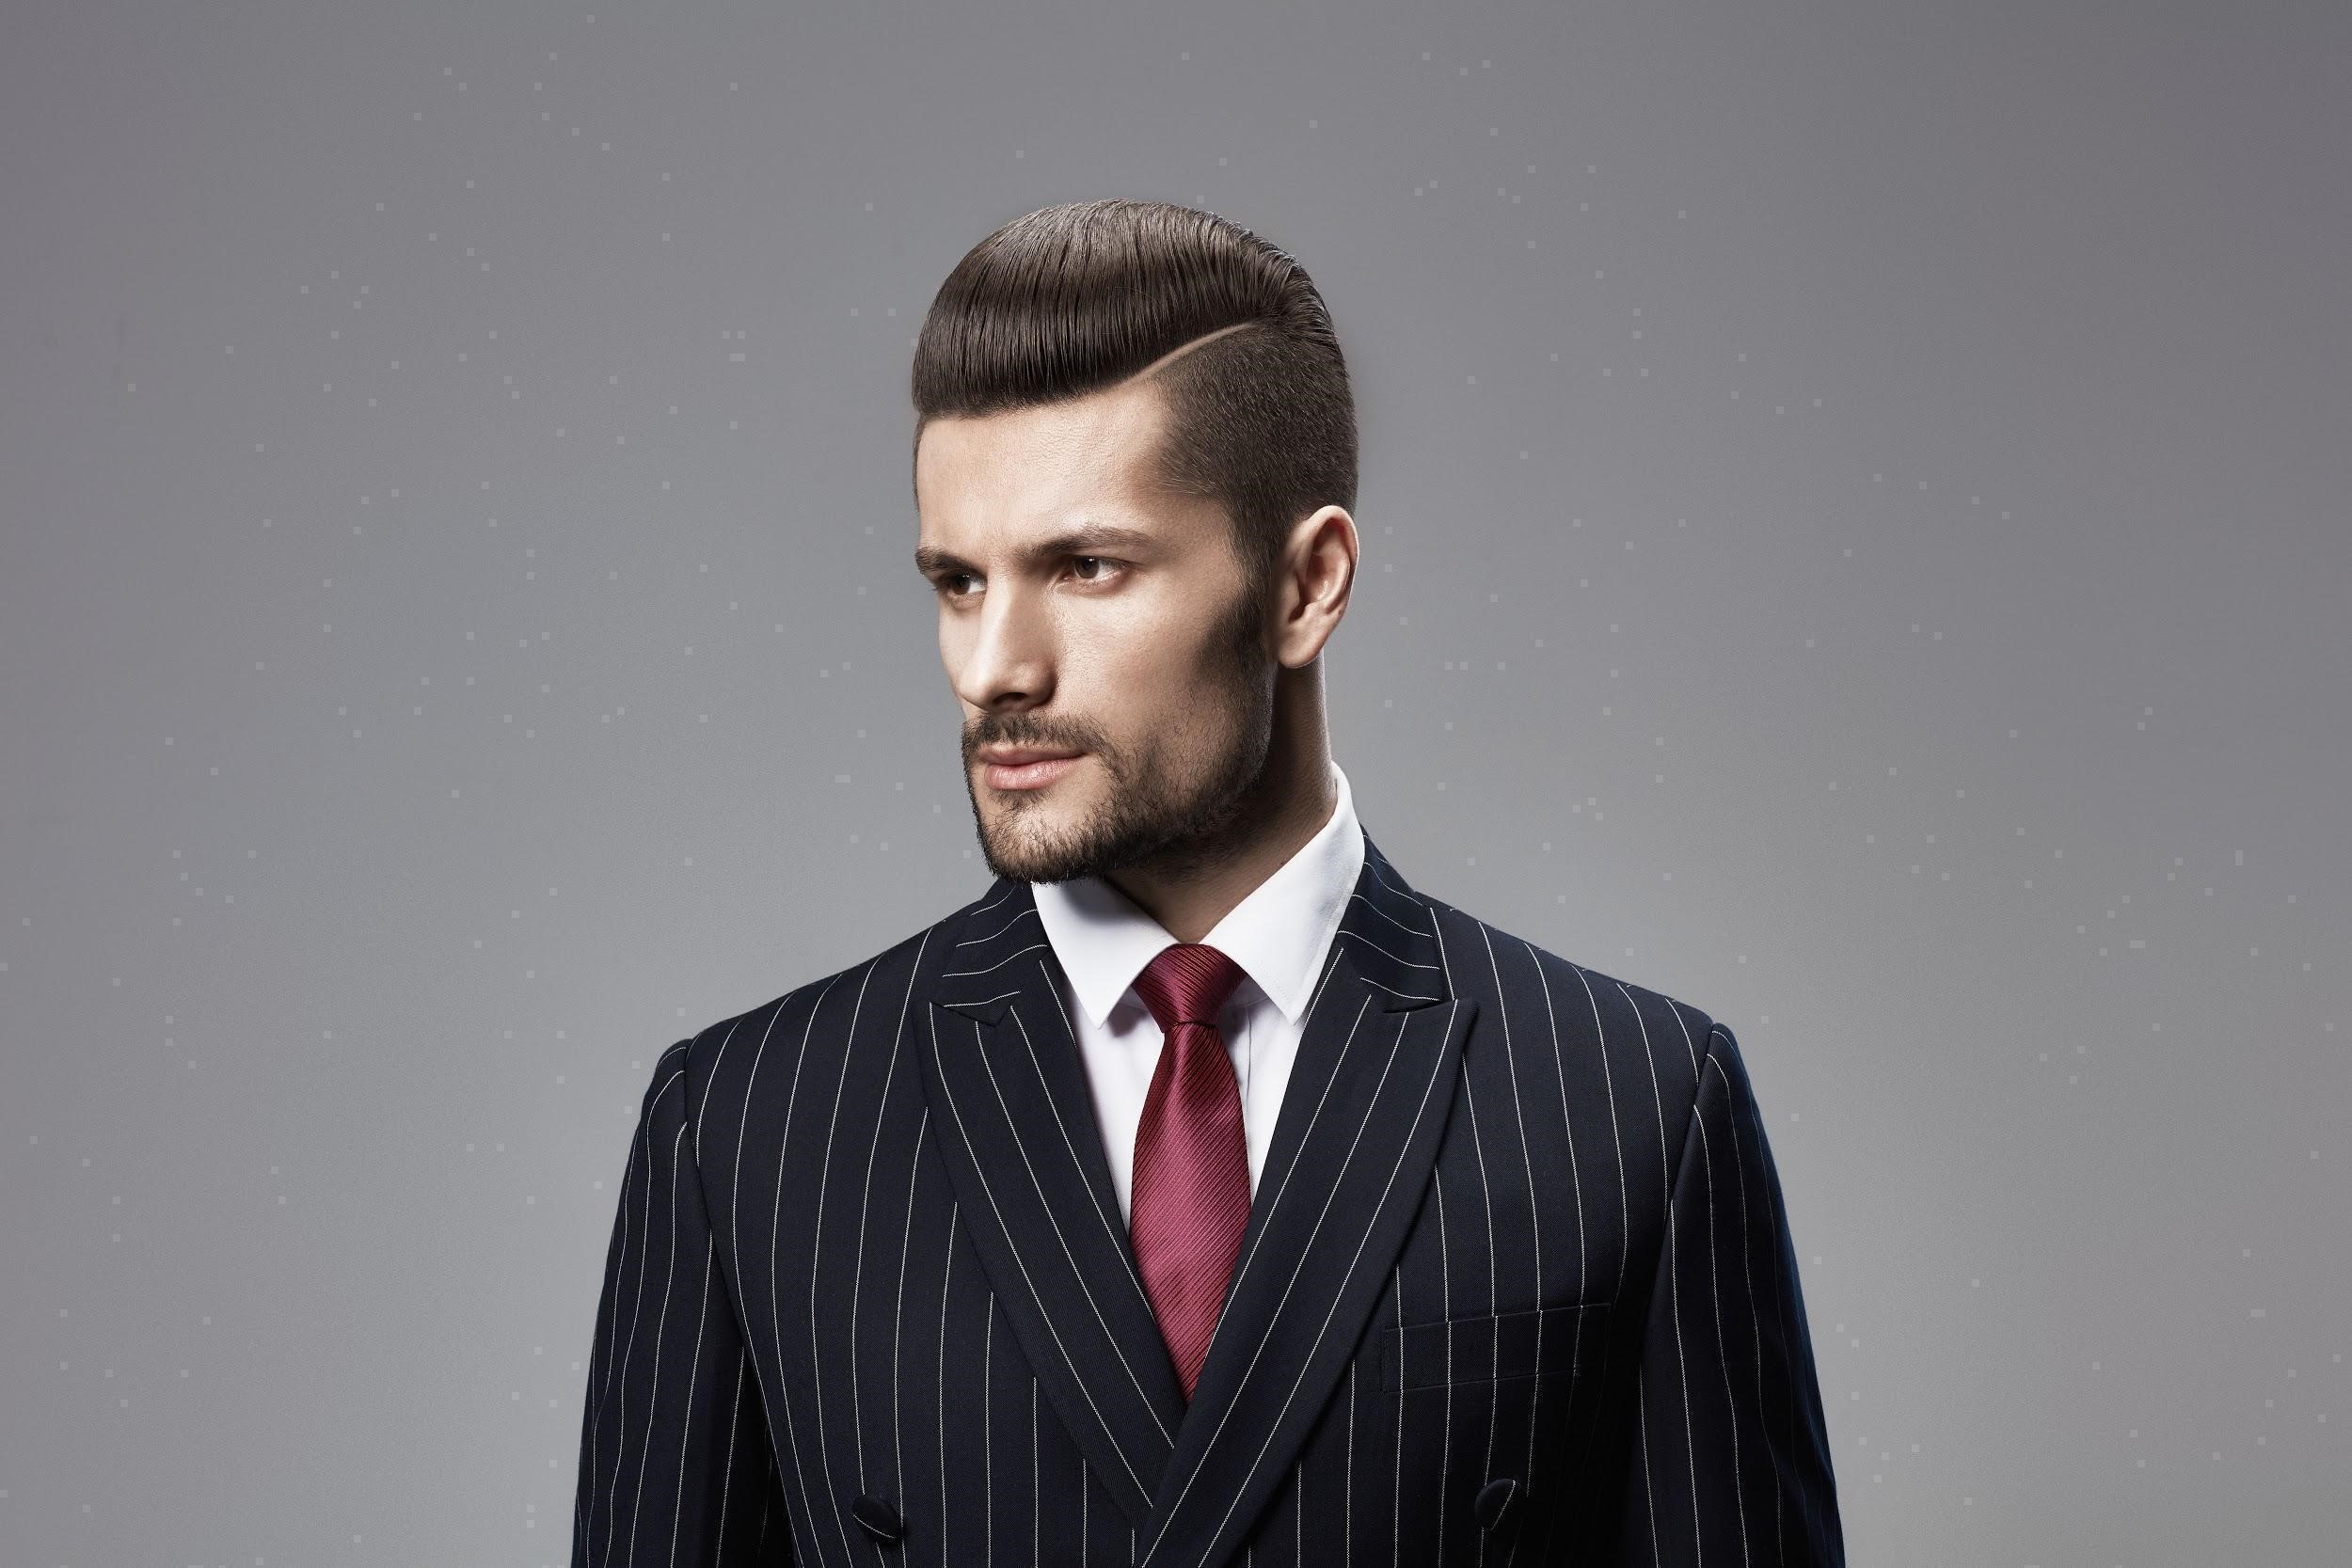 Classic Short Comb-over man in suit